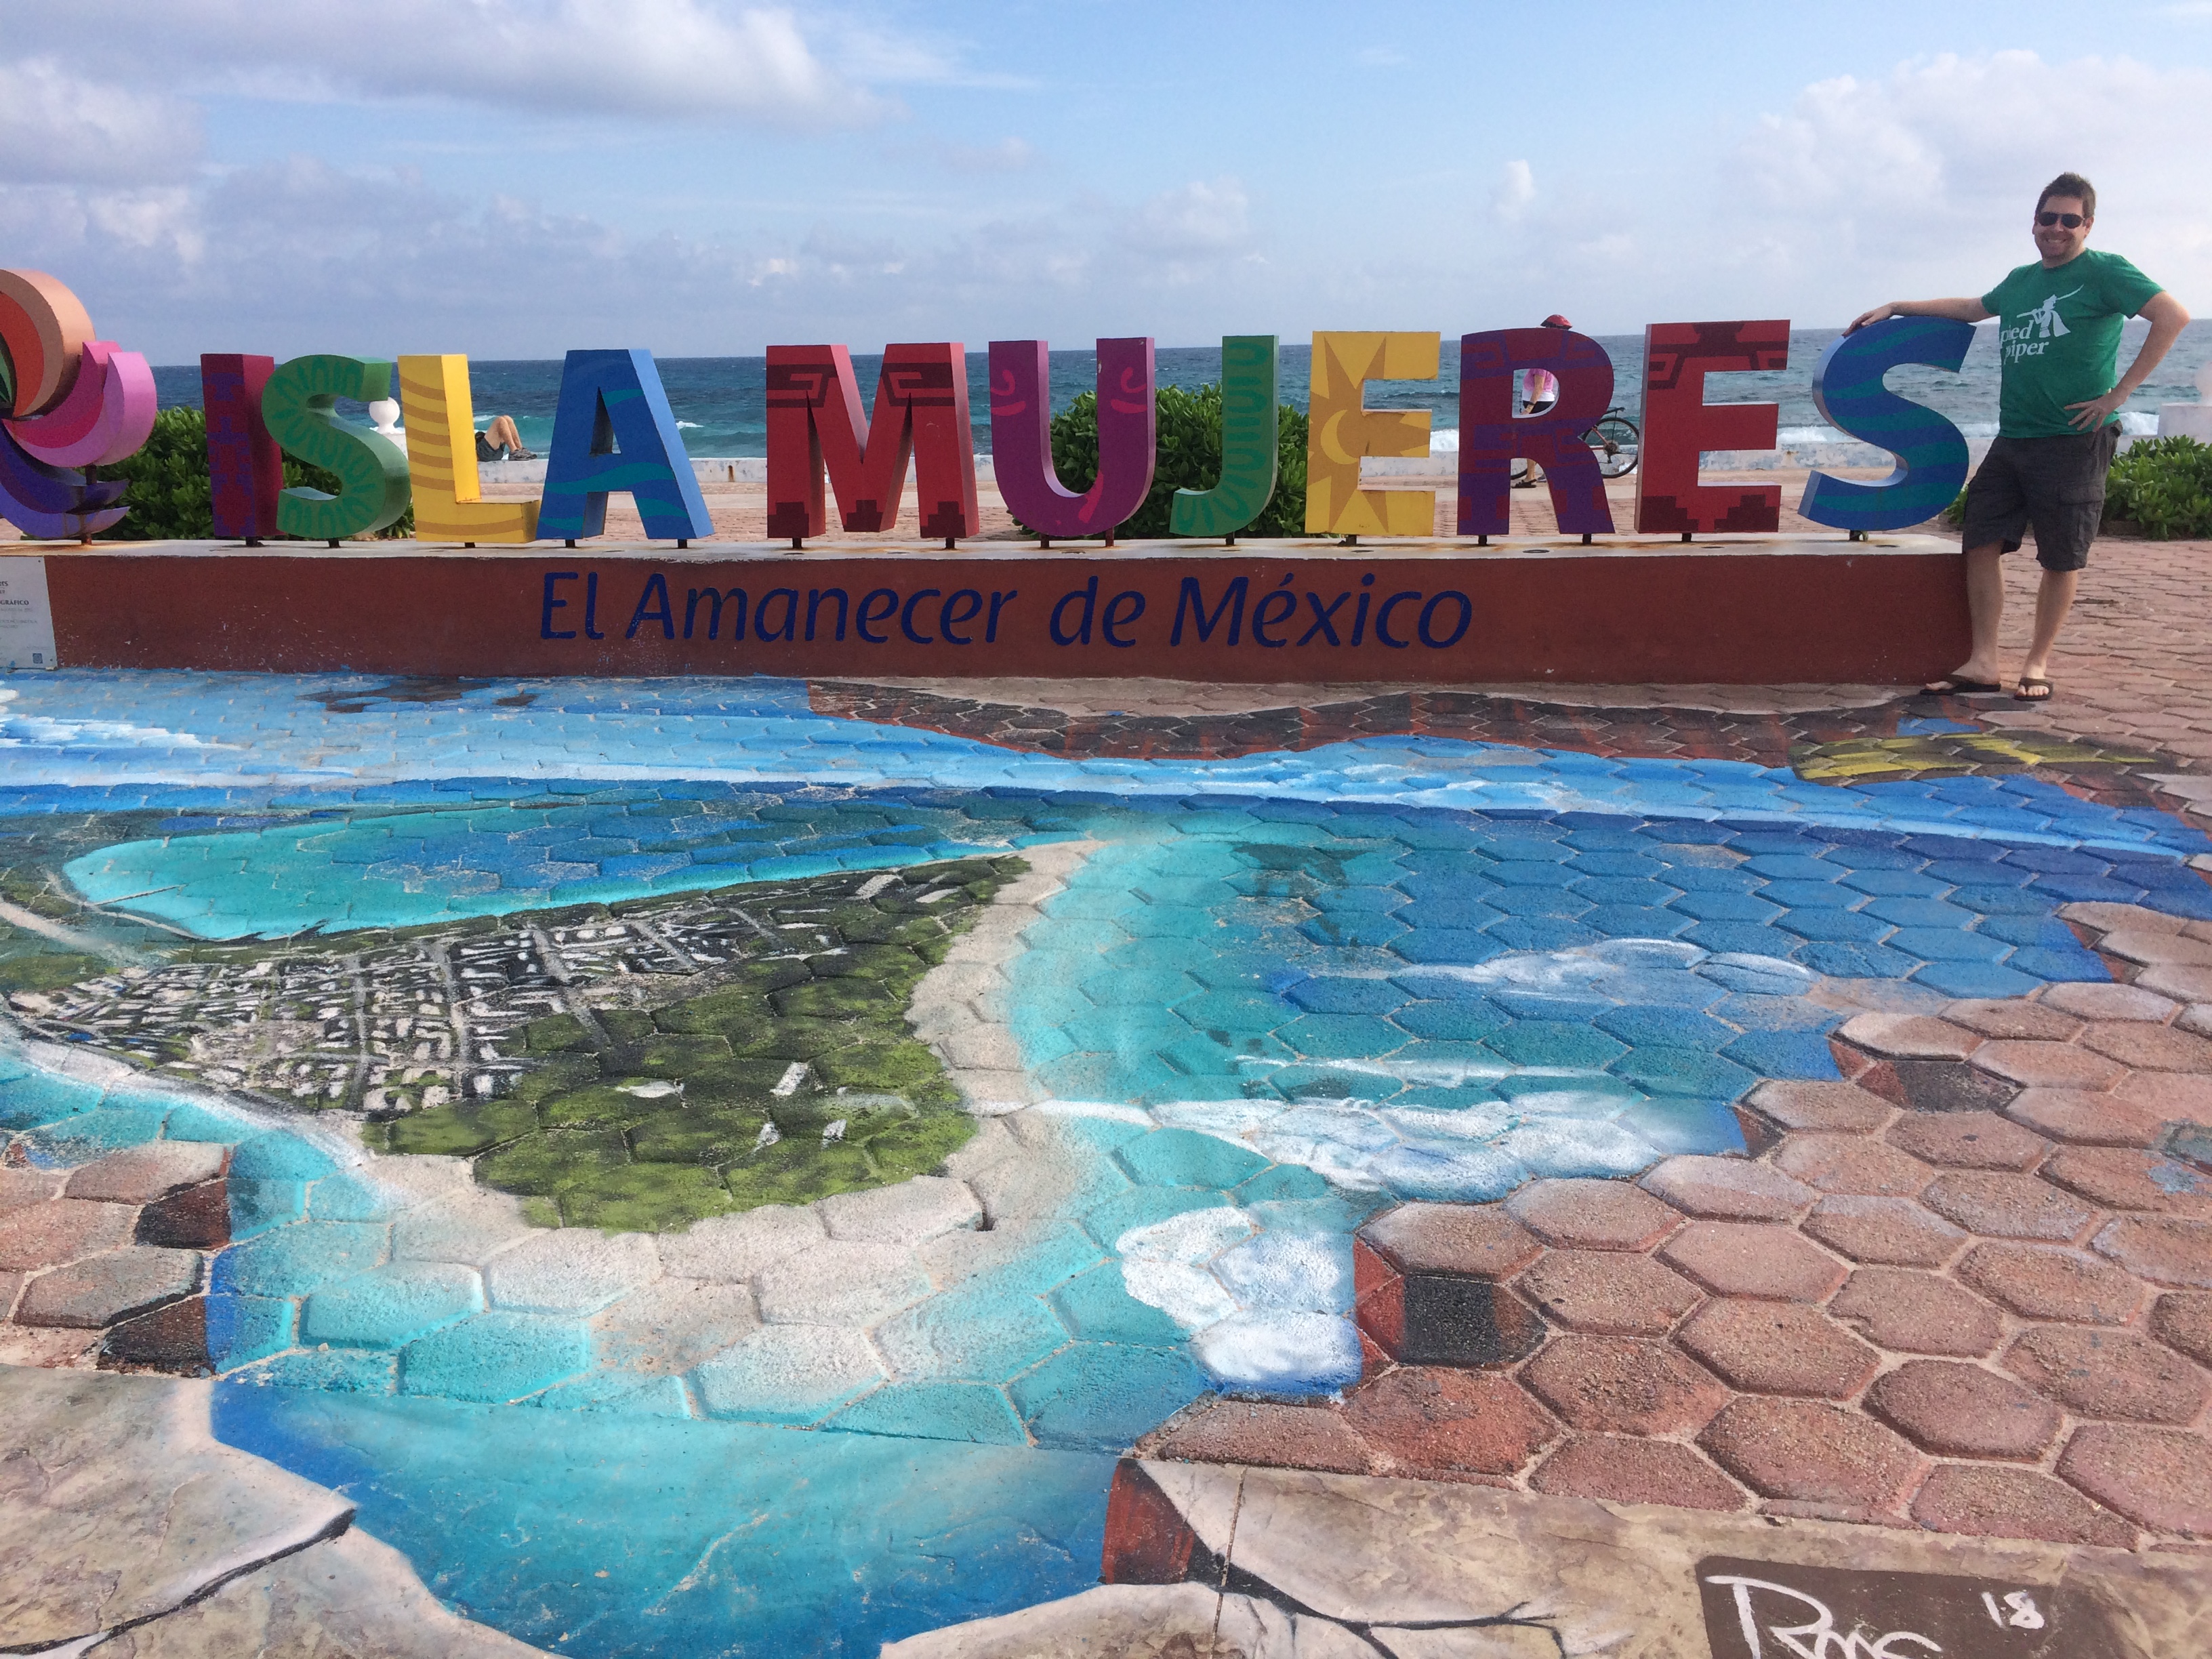 More Street Art of Isla Mujeres